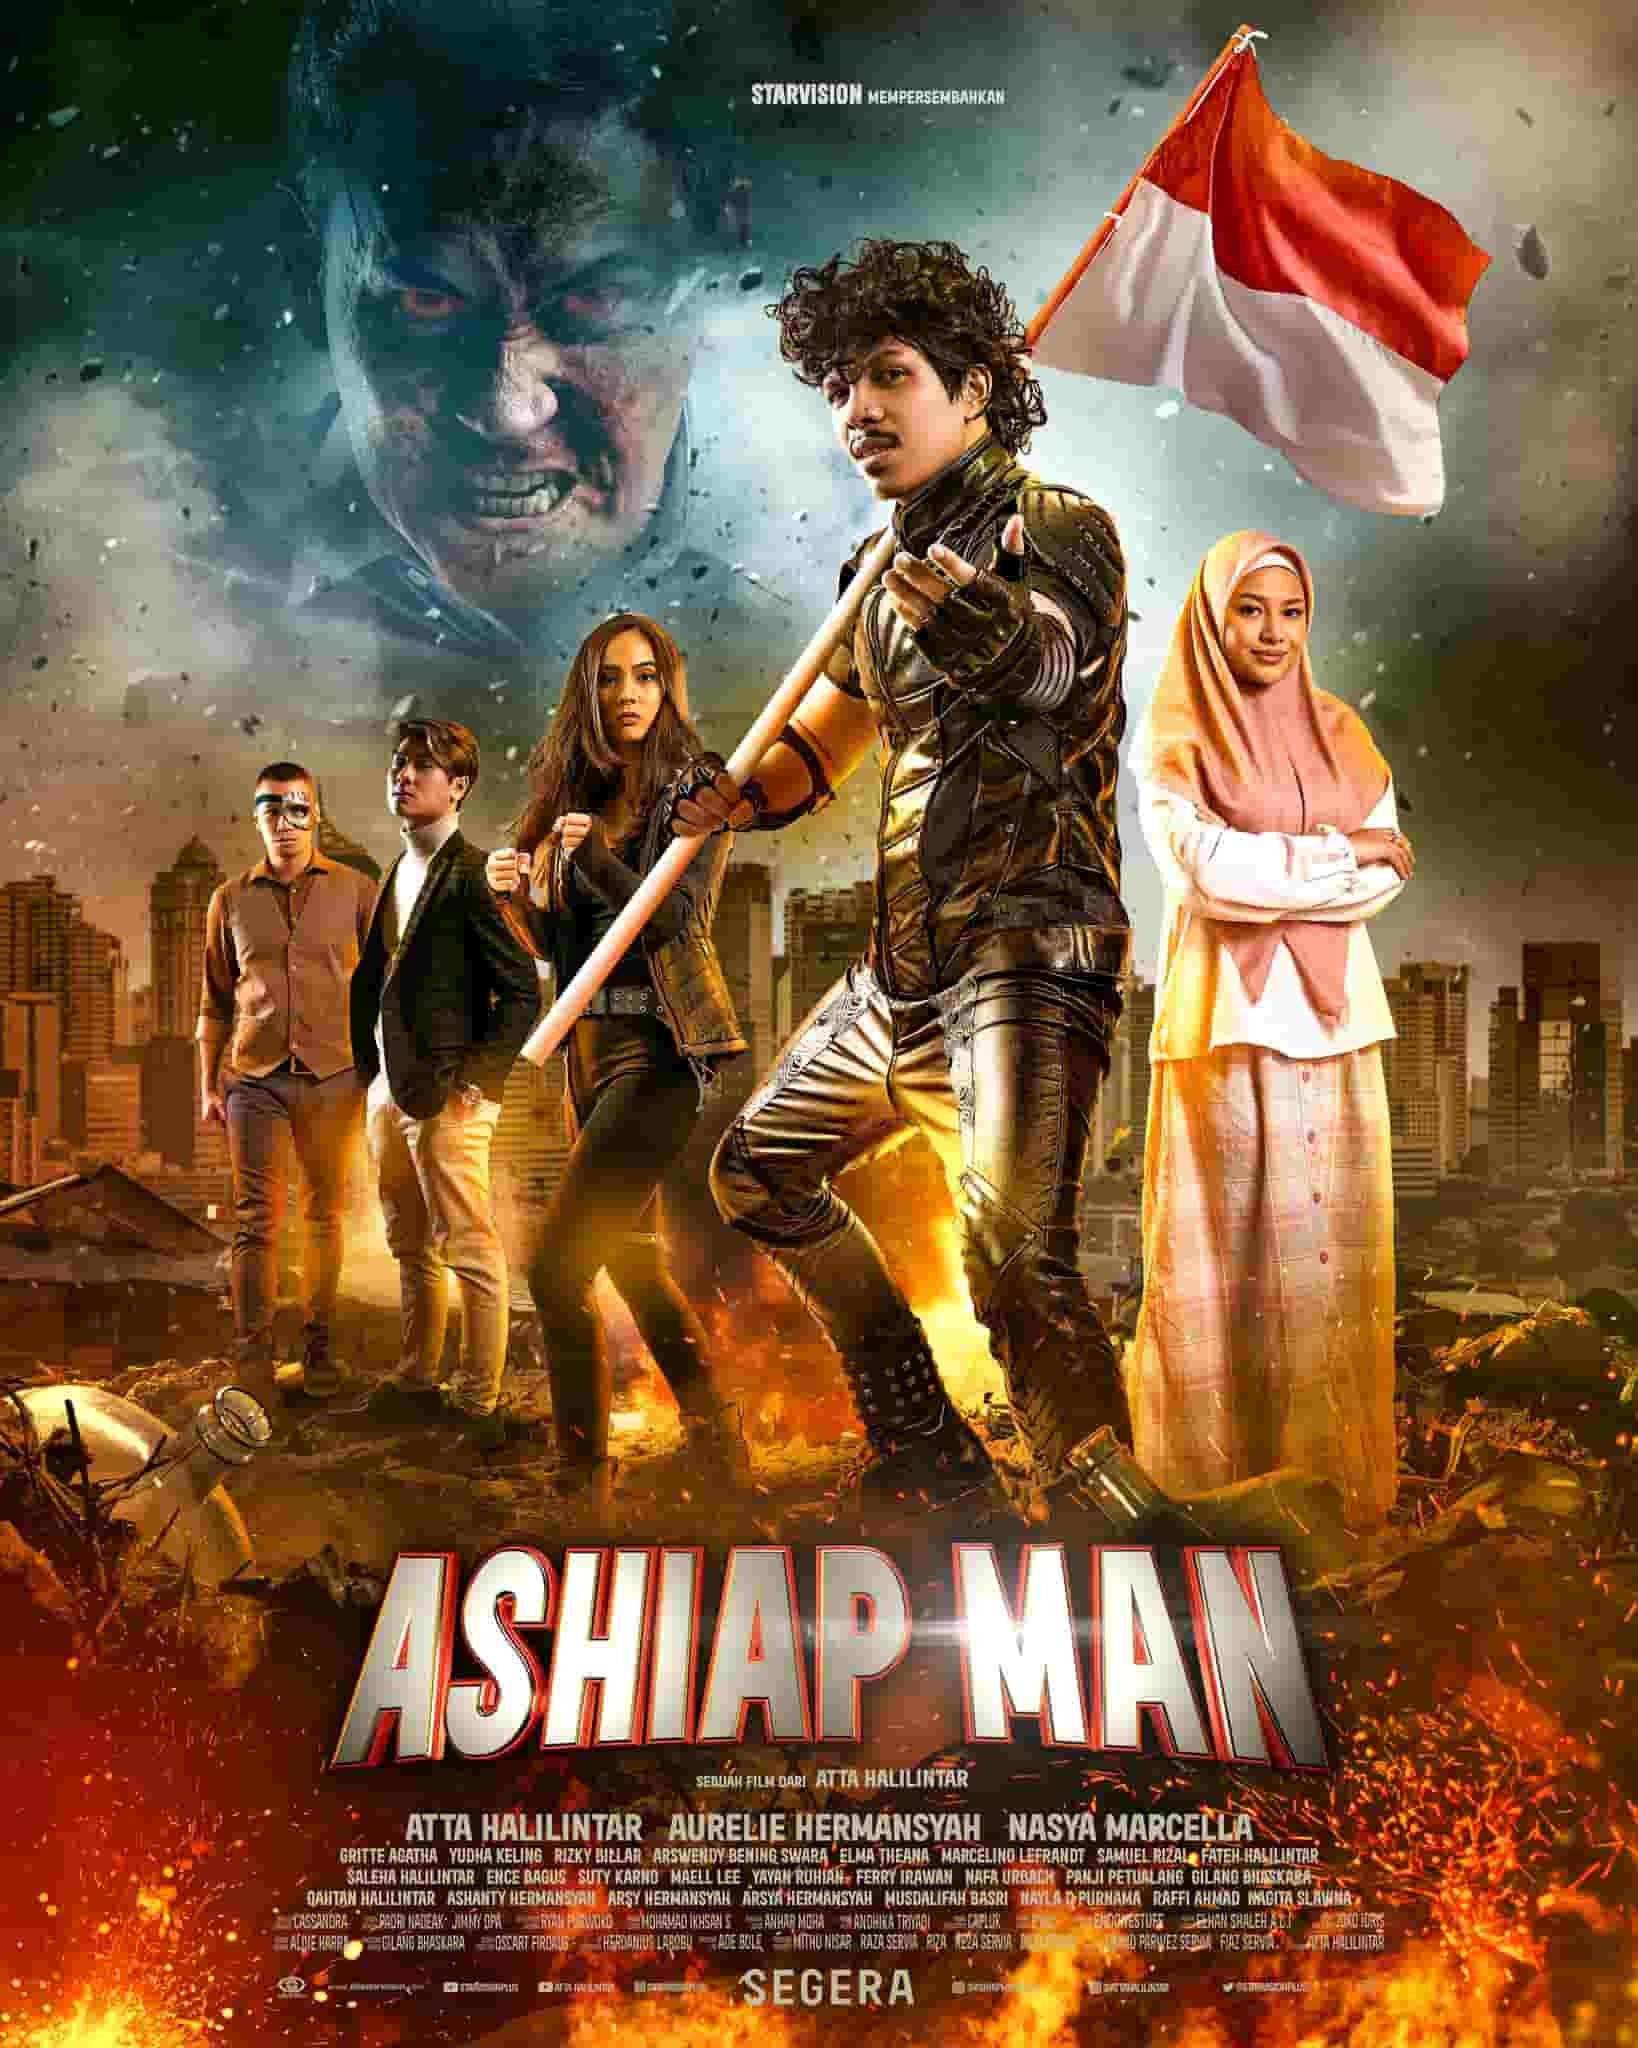 Ashiap Man - Sinopsis, Pemain, OST, Review